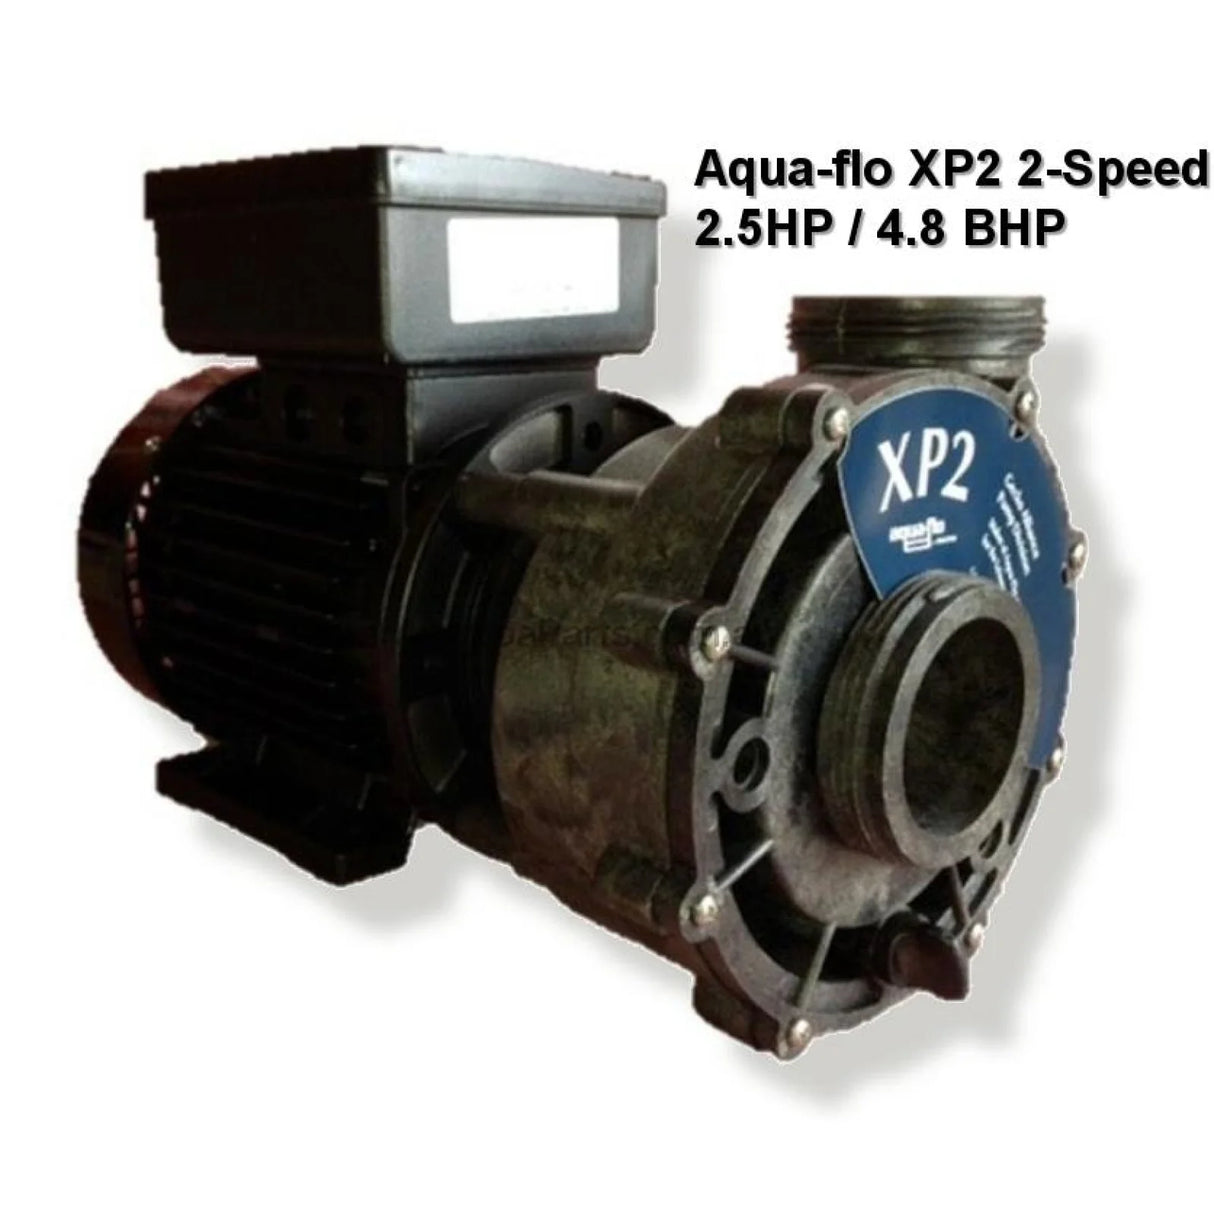 Aqua-Flo XP2 2.5HP(4.8BHP) - 2-Speed Flo-Master - Spa Jet Booster Pump - Heater and Spa Parts